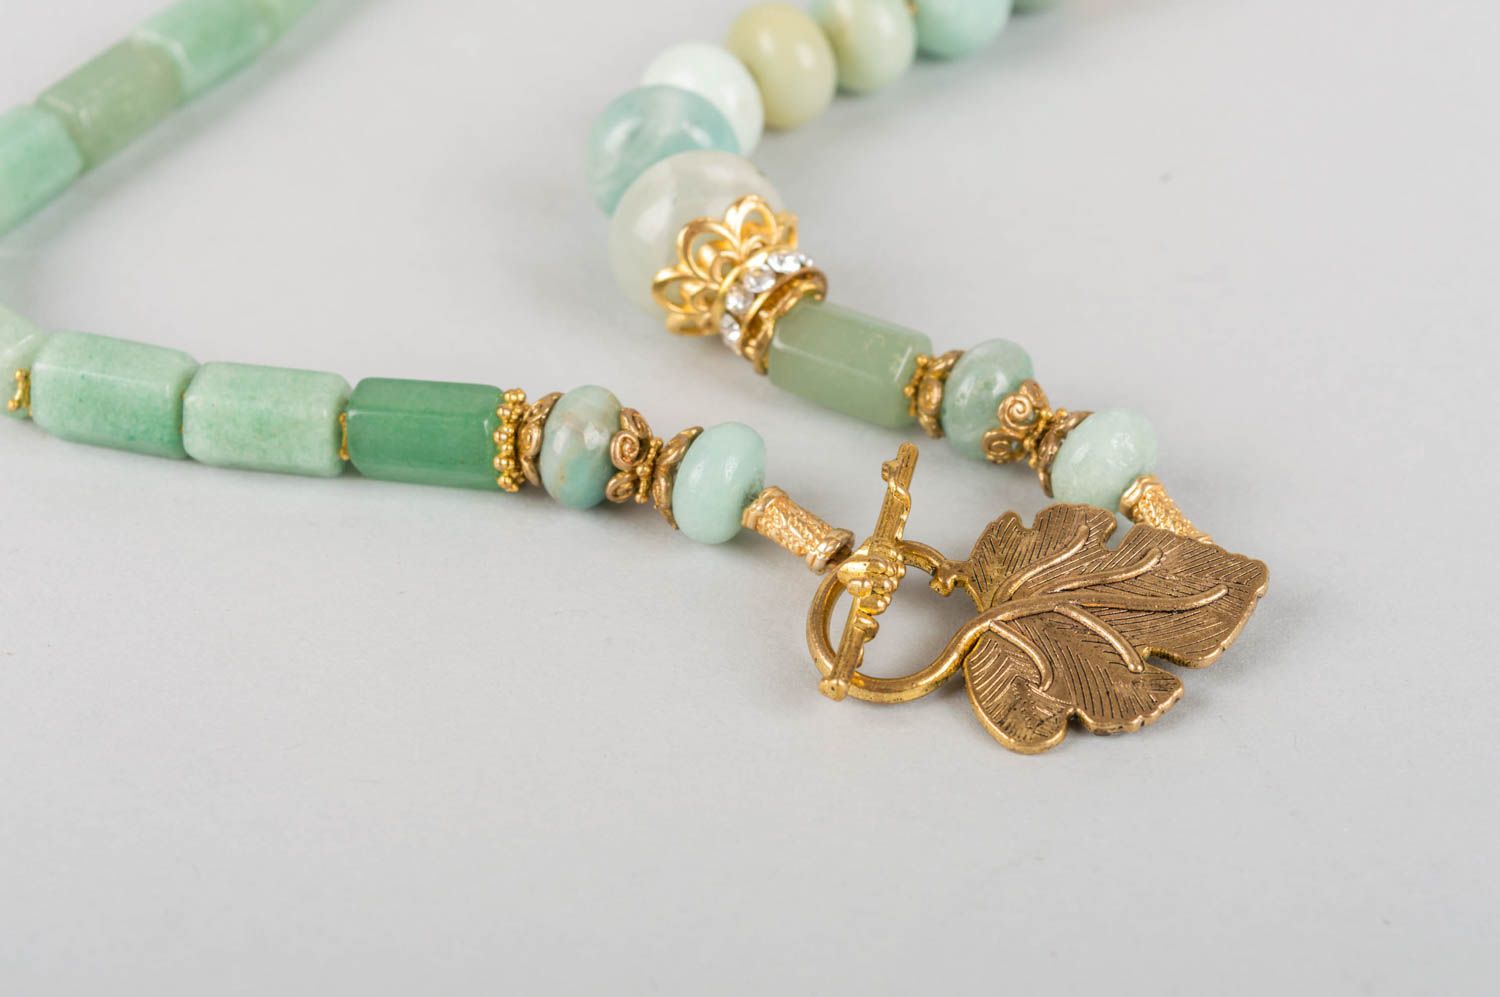 Handmade necklace with natural stones aventurine jade accessory stylish jewelry photo 4